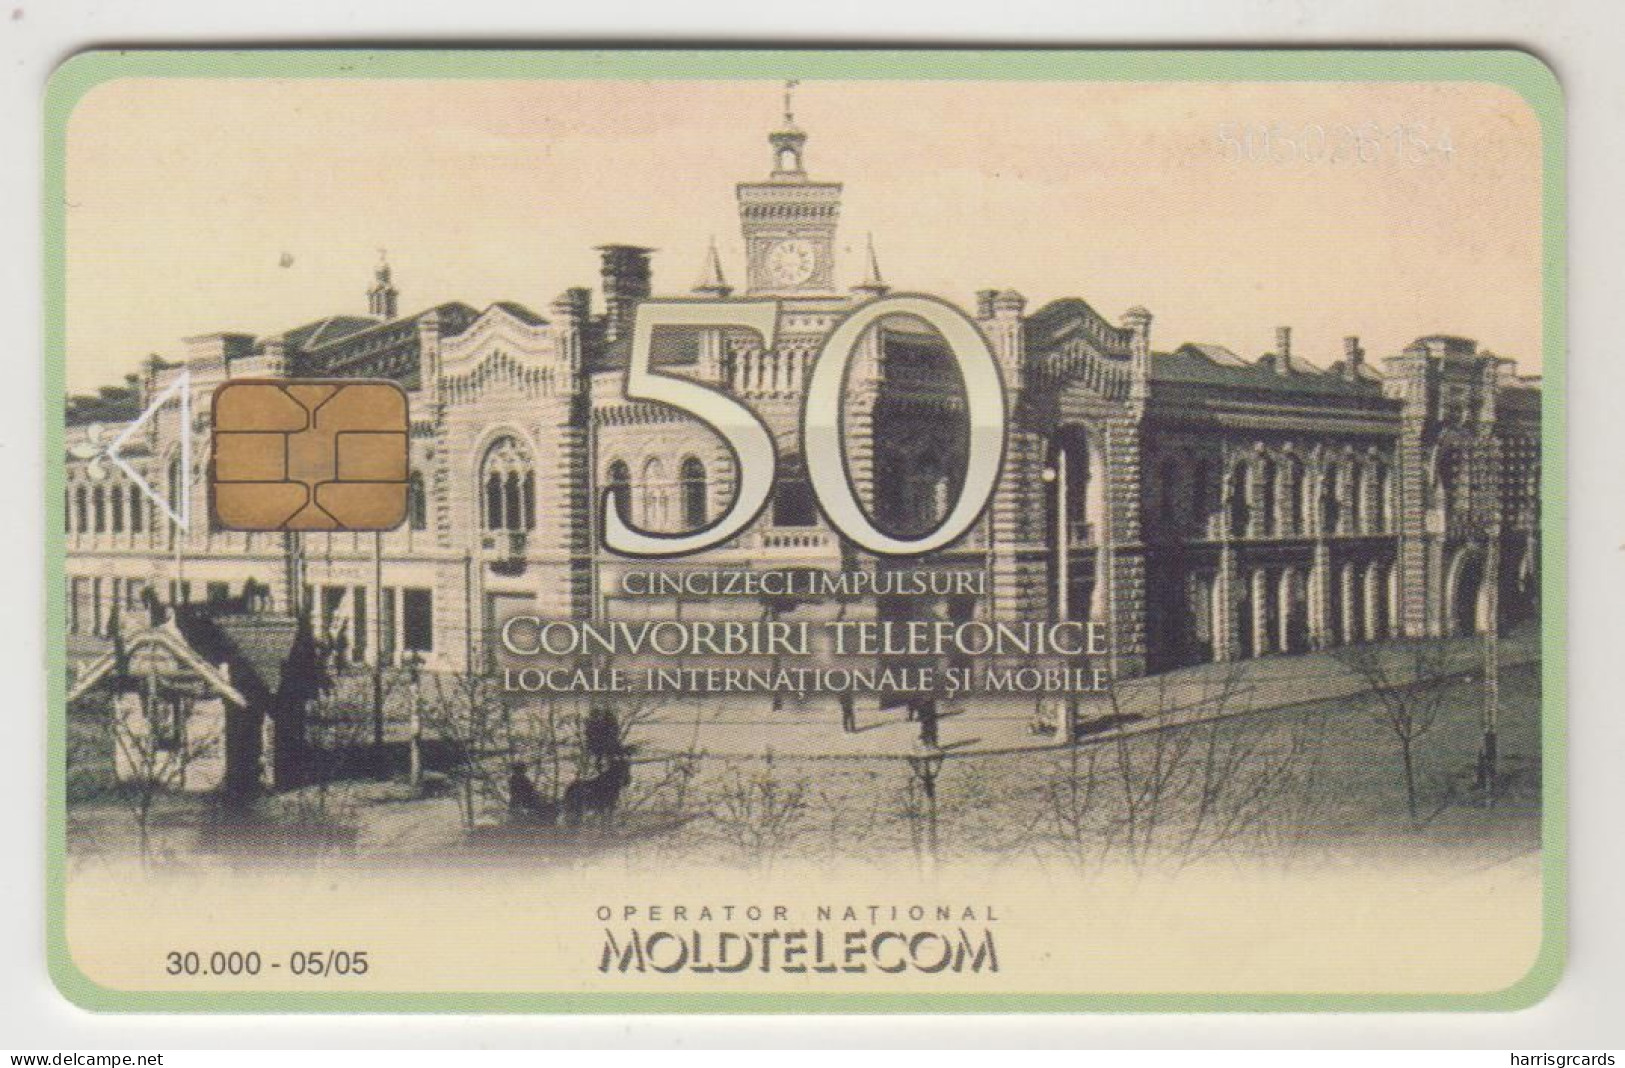 MOLDOVA - Passaj, Chip:CHT08, Moldtelecom 50 Units, 05/05, Tirage 30.000,used - Moldavie